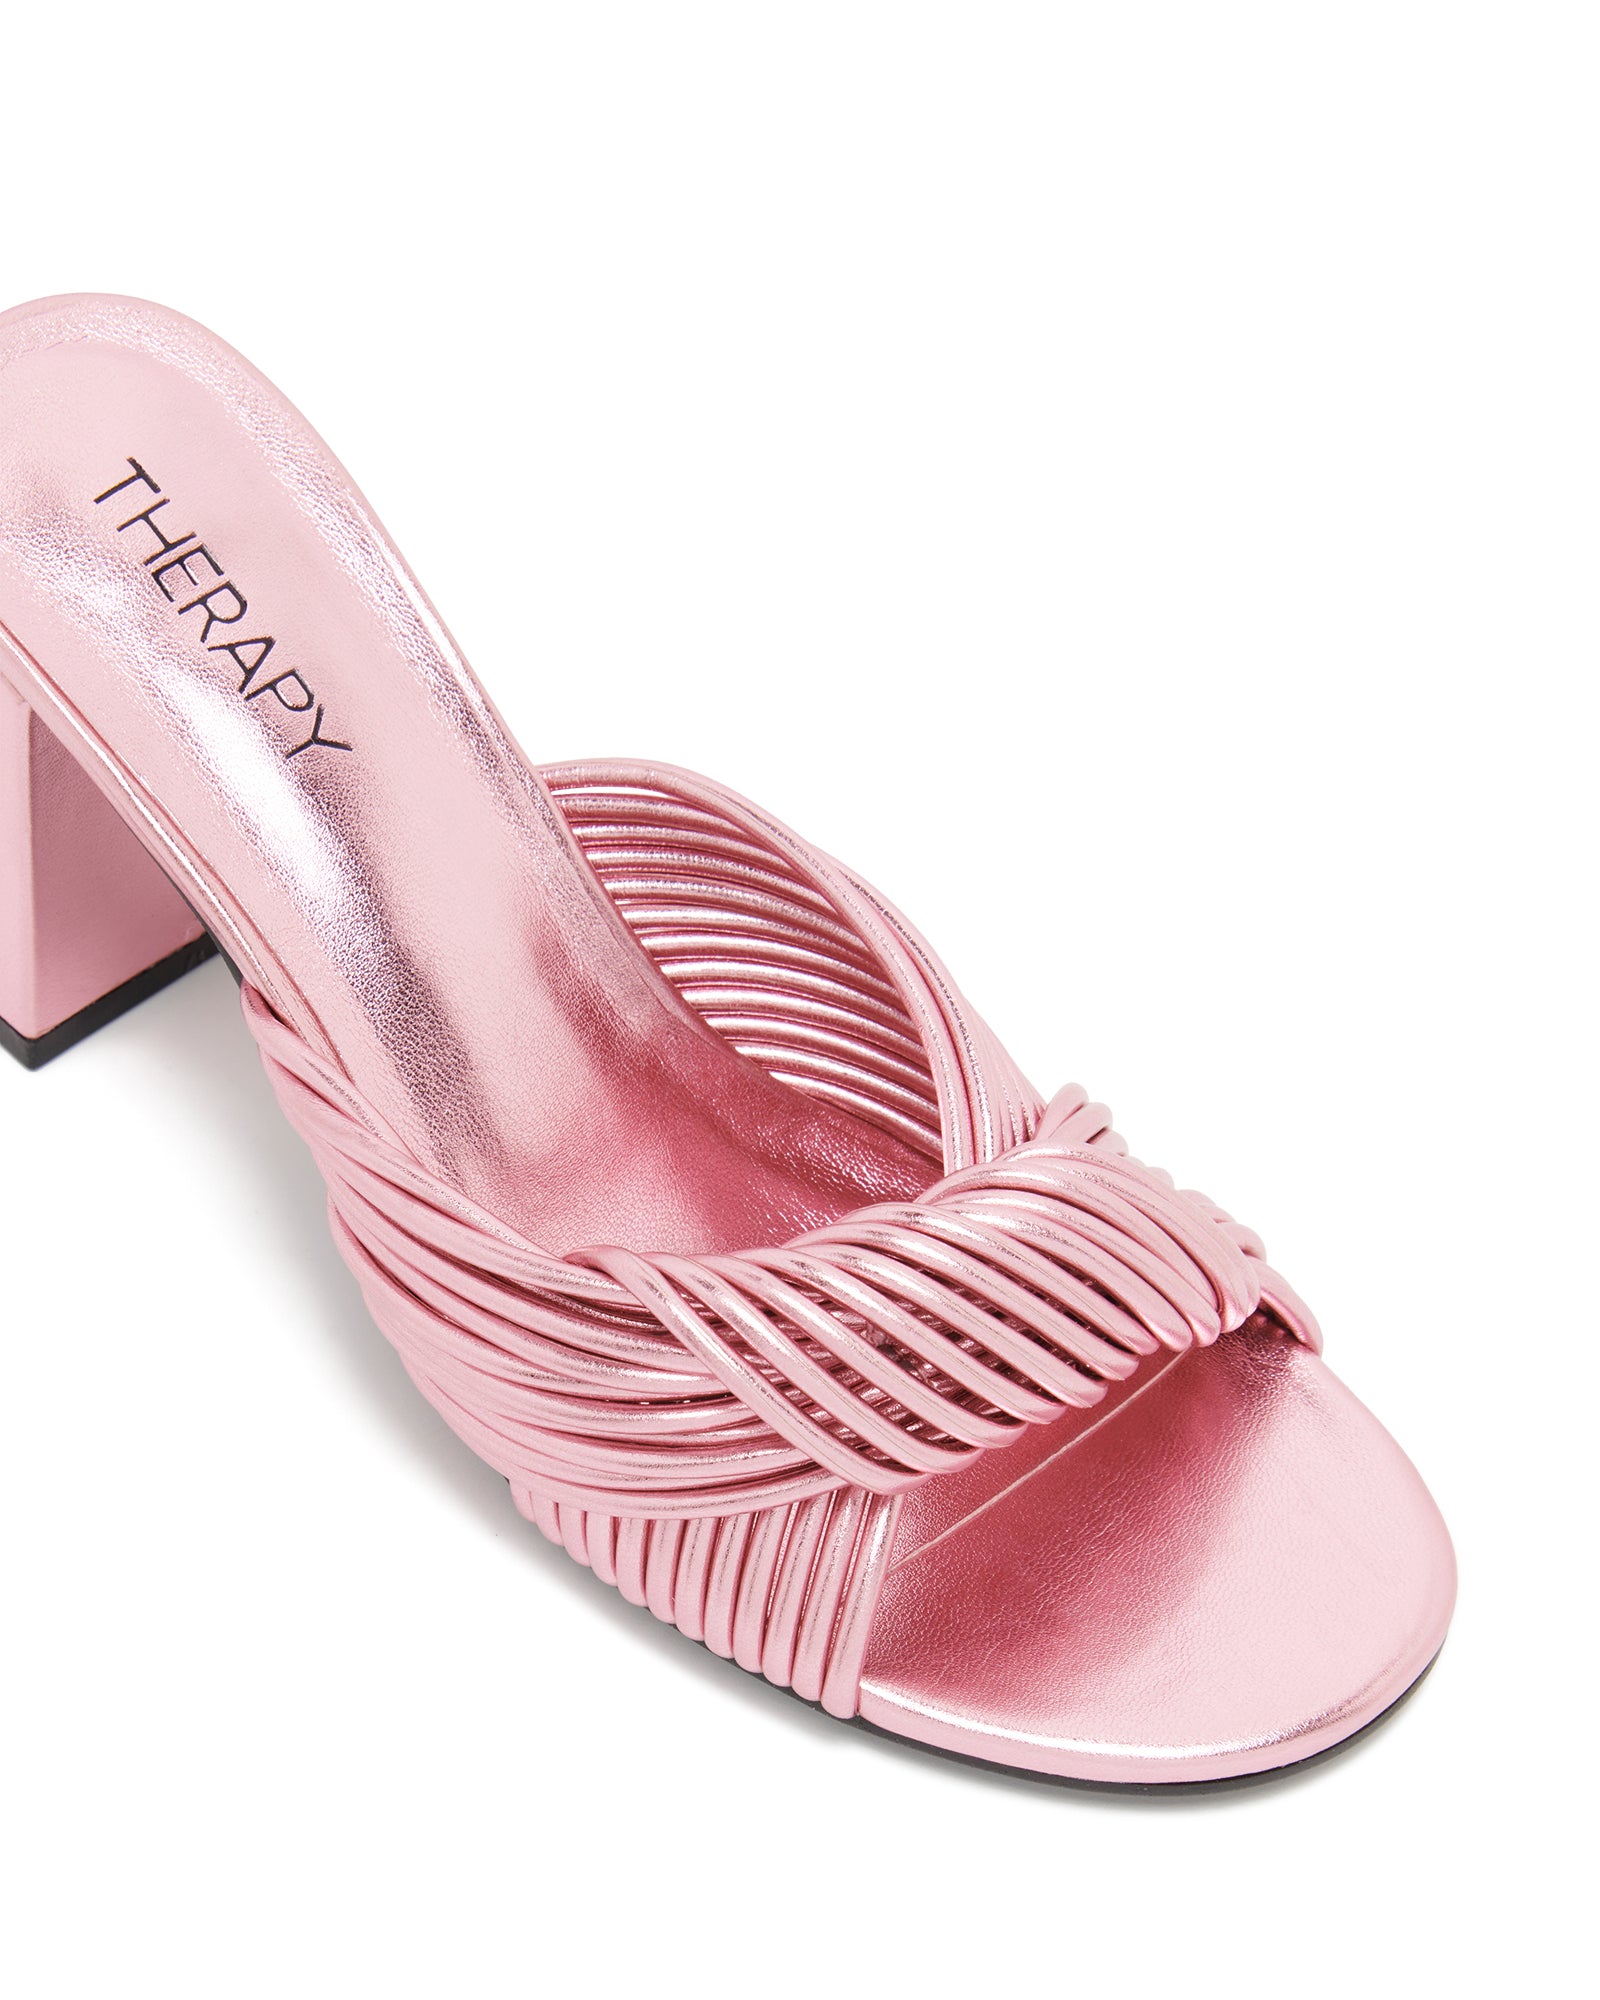 Metallic Knot Decor Stiletto Heeled Ankle Strap Sandals for Sale Australia|  New Collection Online| SHEIN Australia